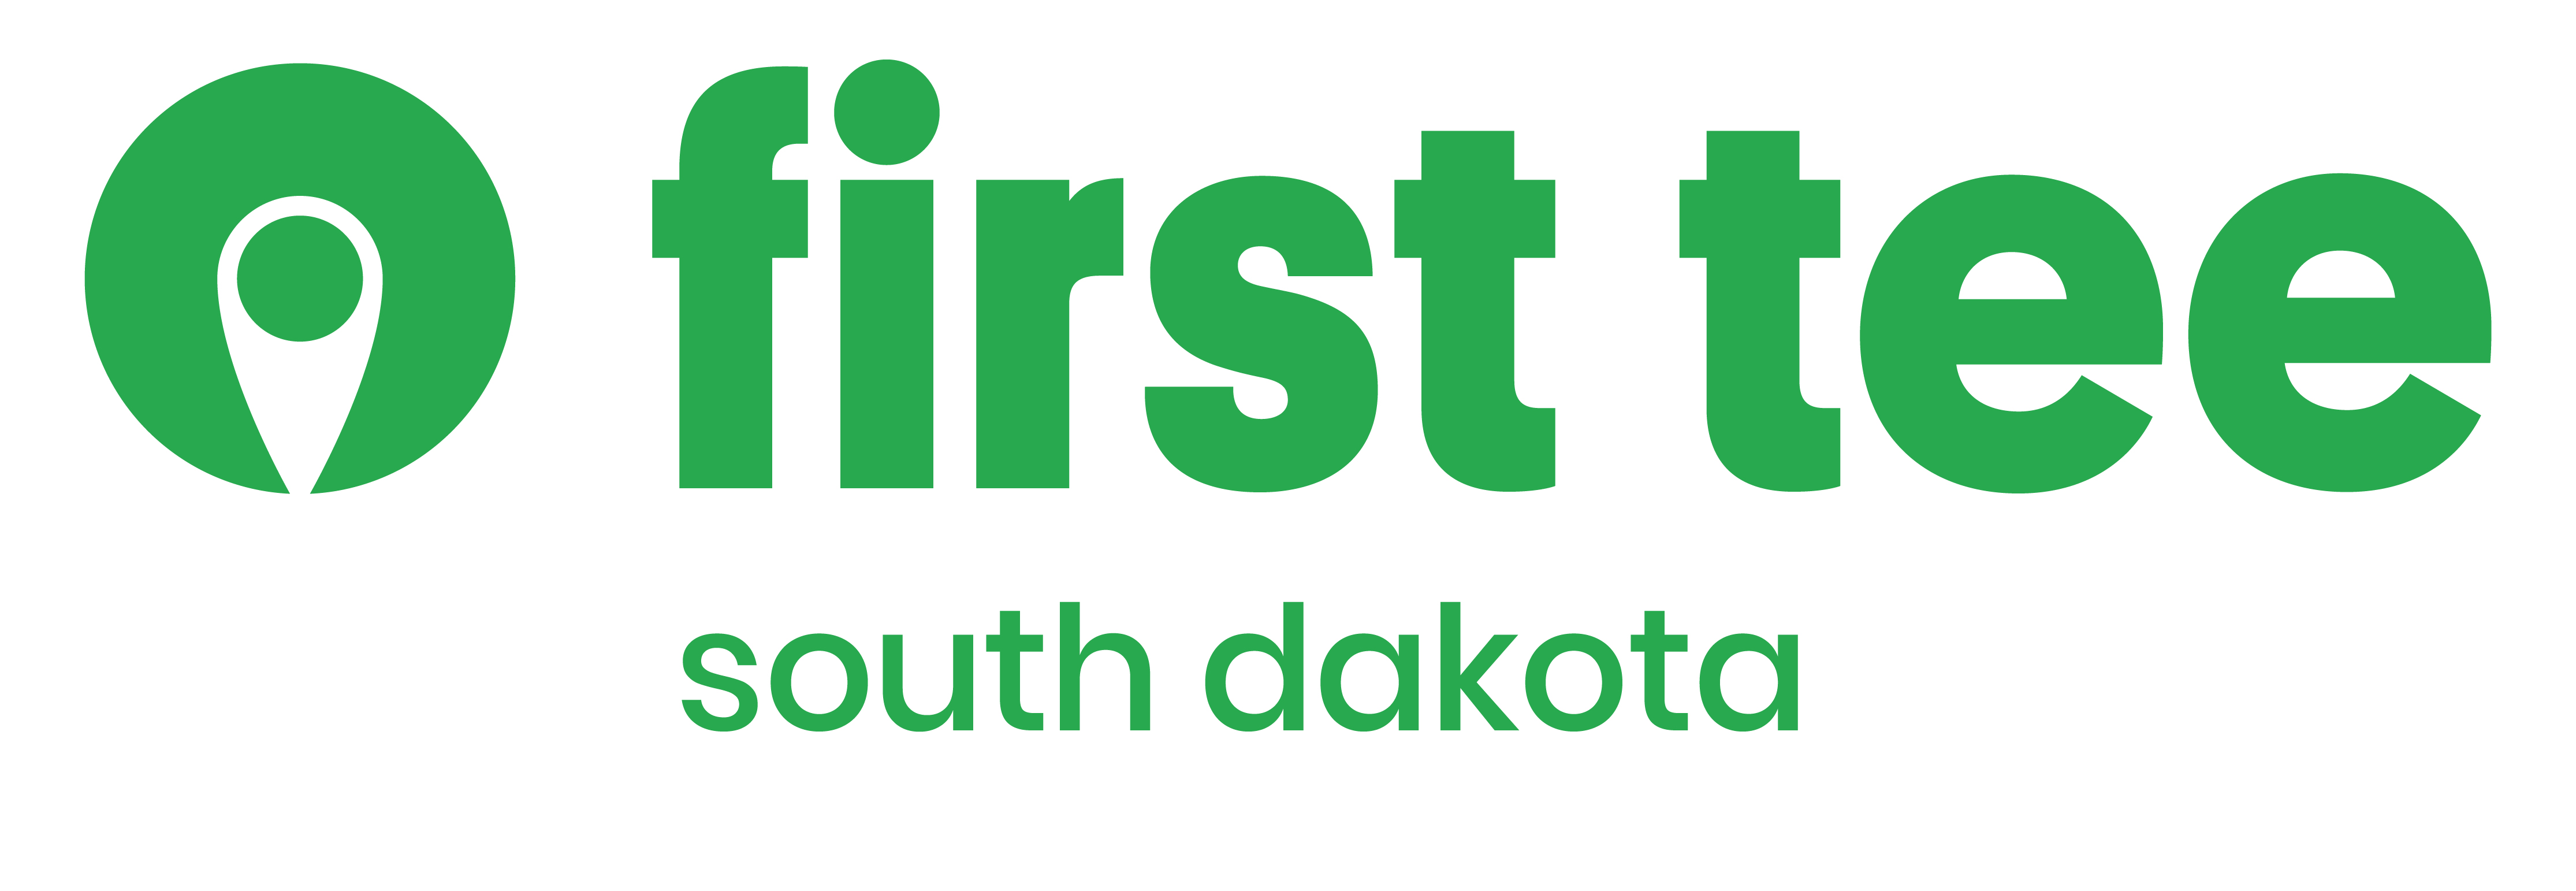 First Tee—South Dakota logo